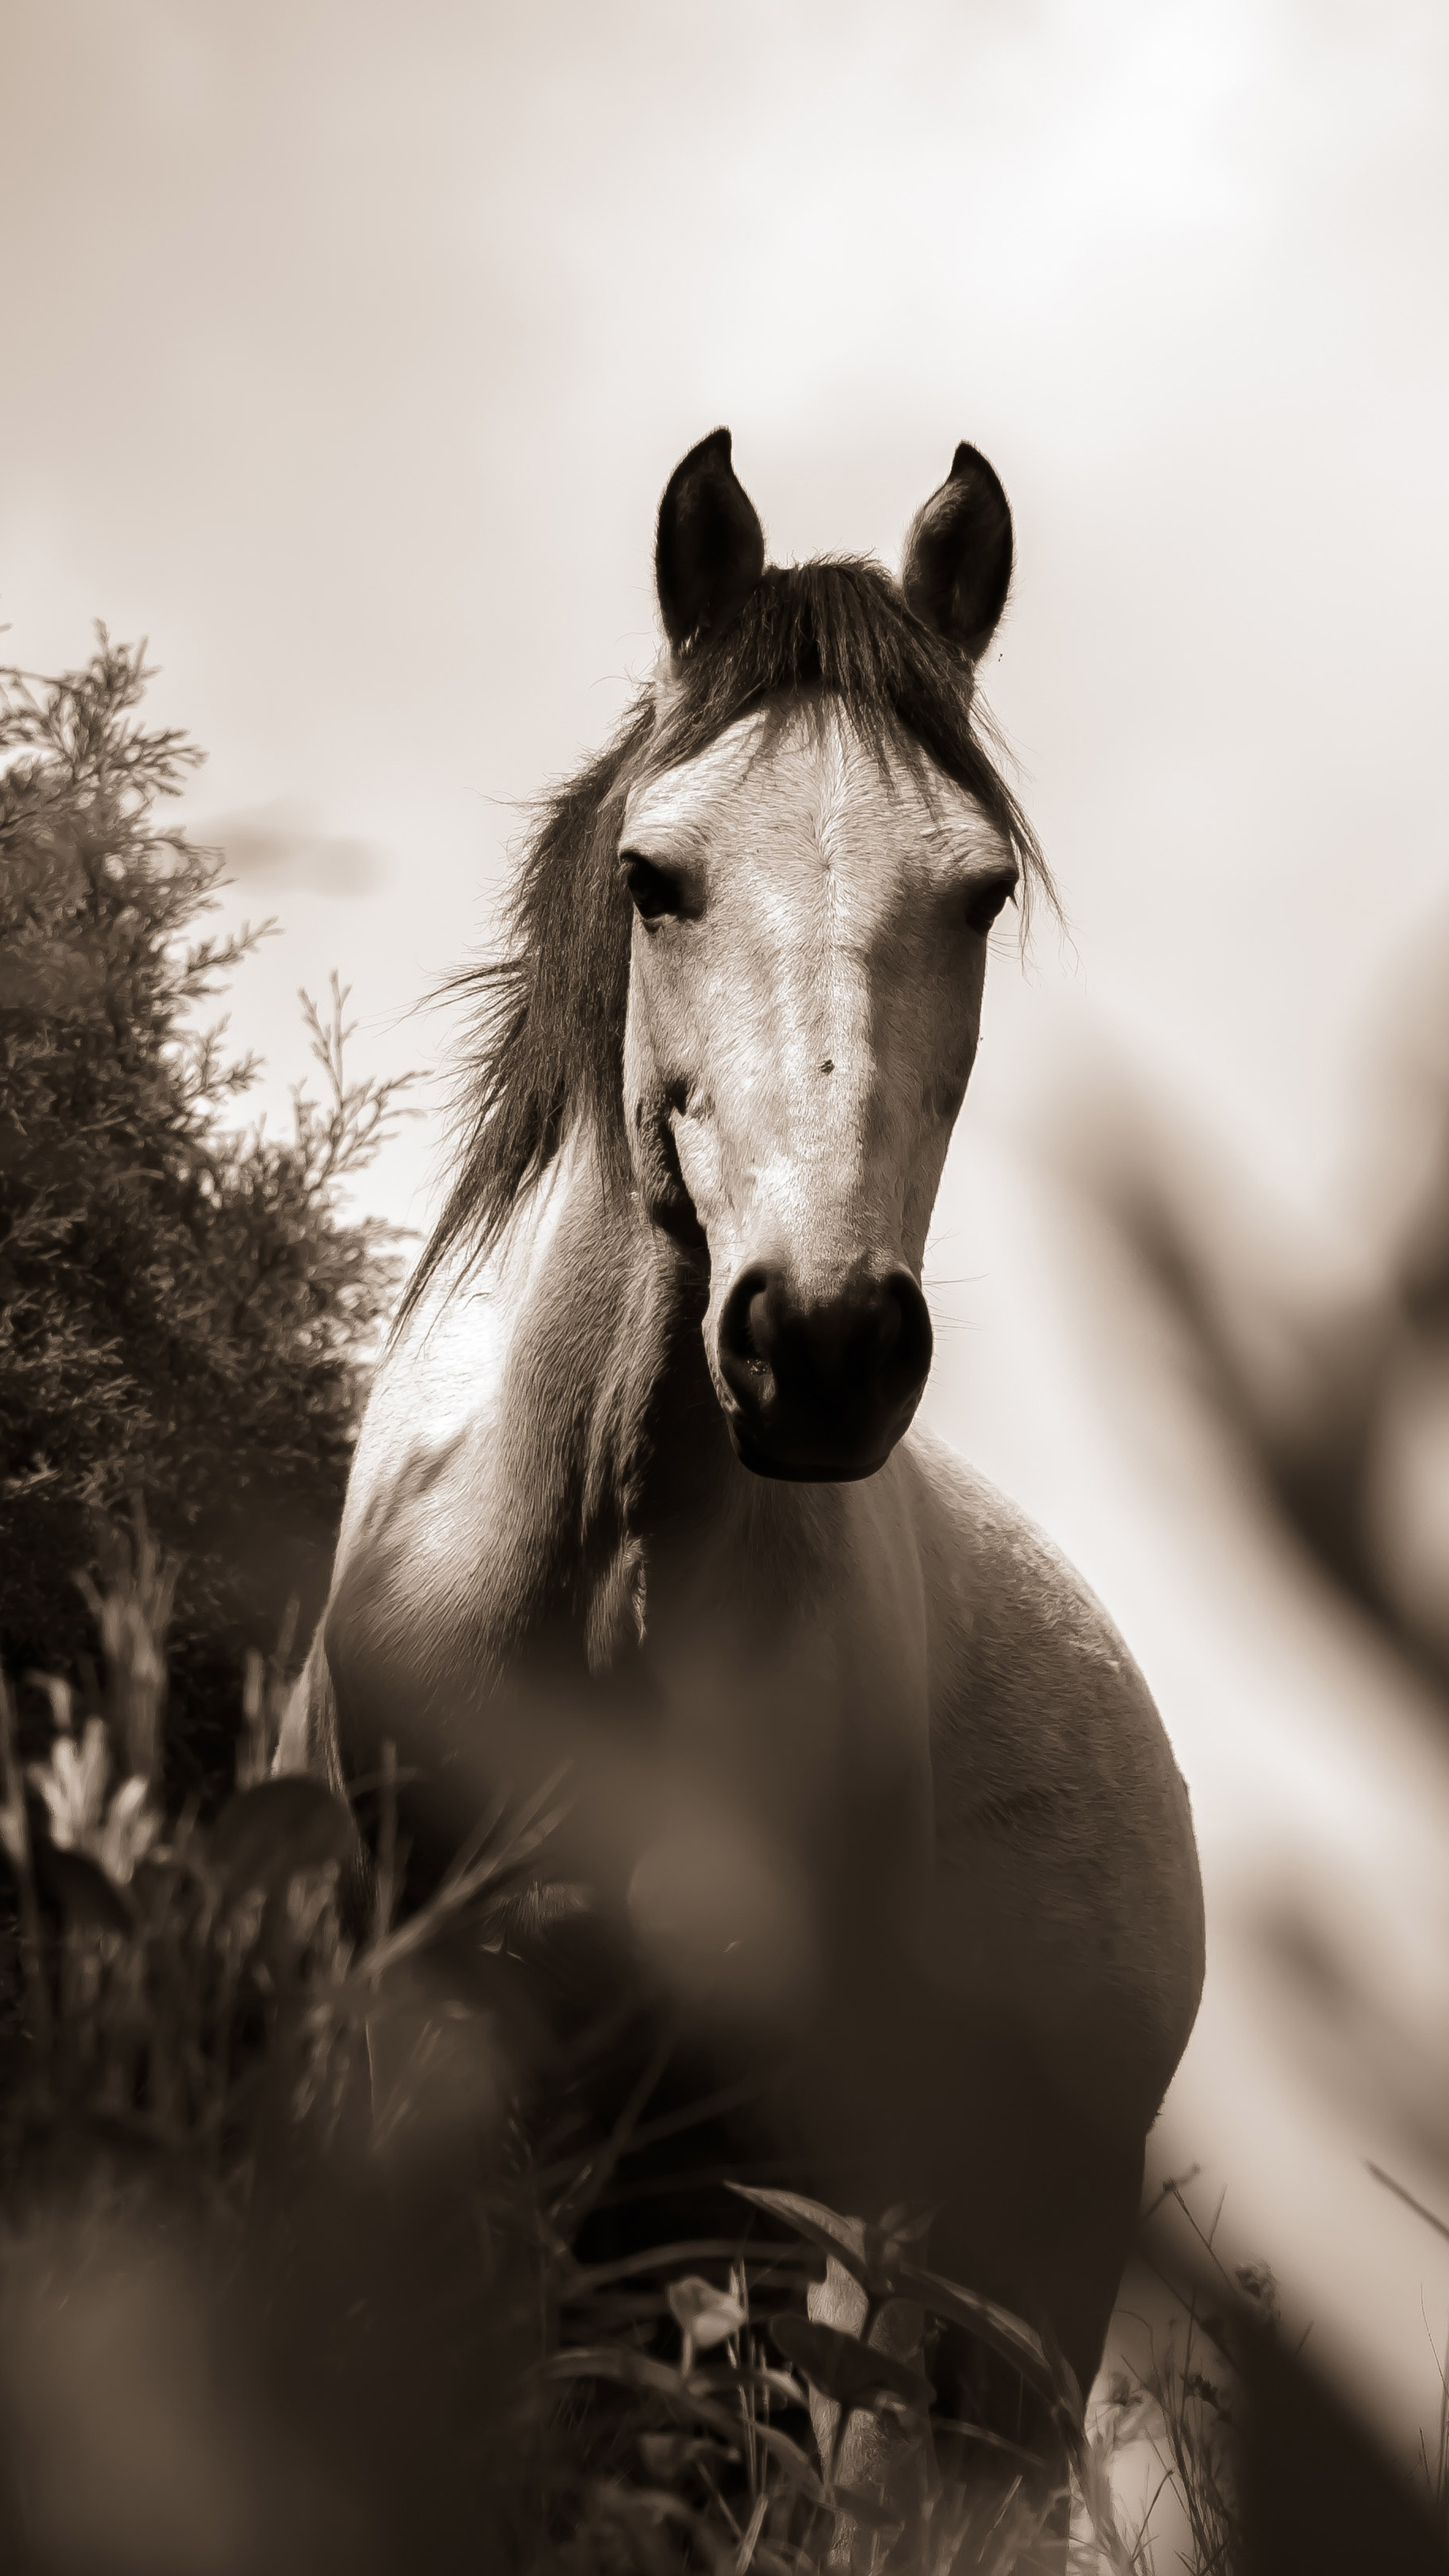 Horse: A hoofed herbivorous mammal of the family Equidae. 2160x3840 4K Wallpaper.